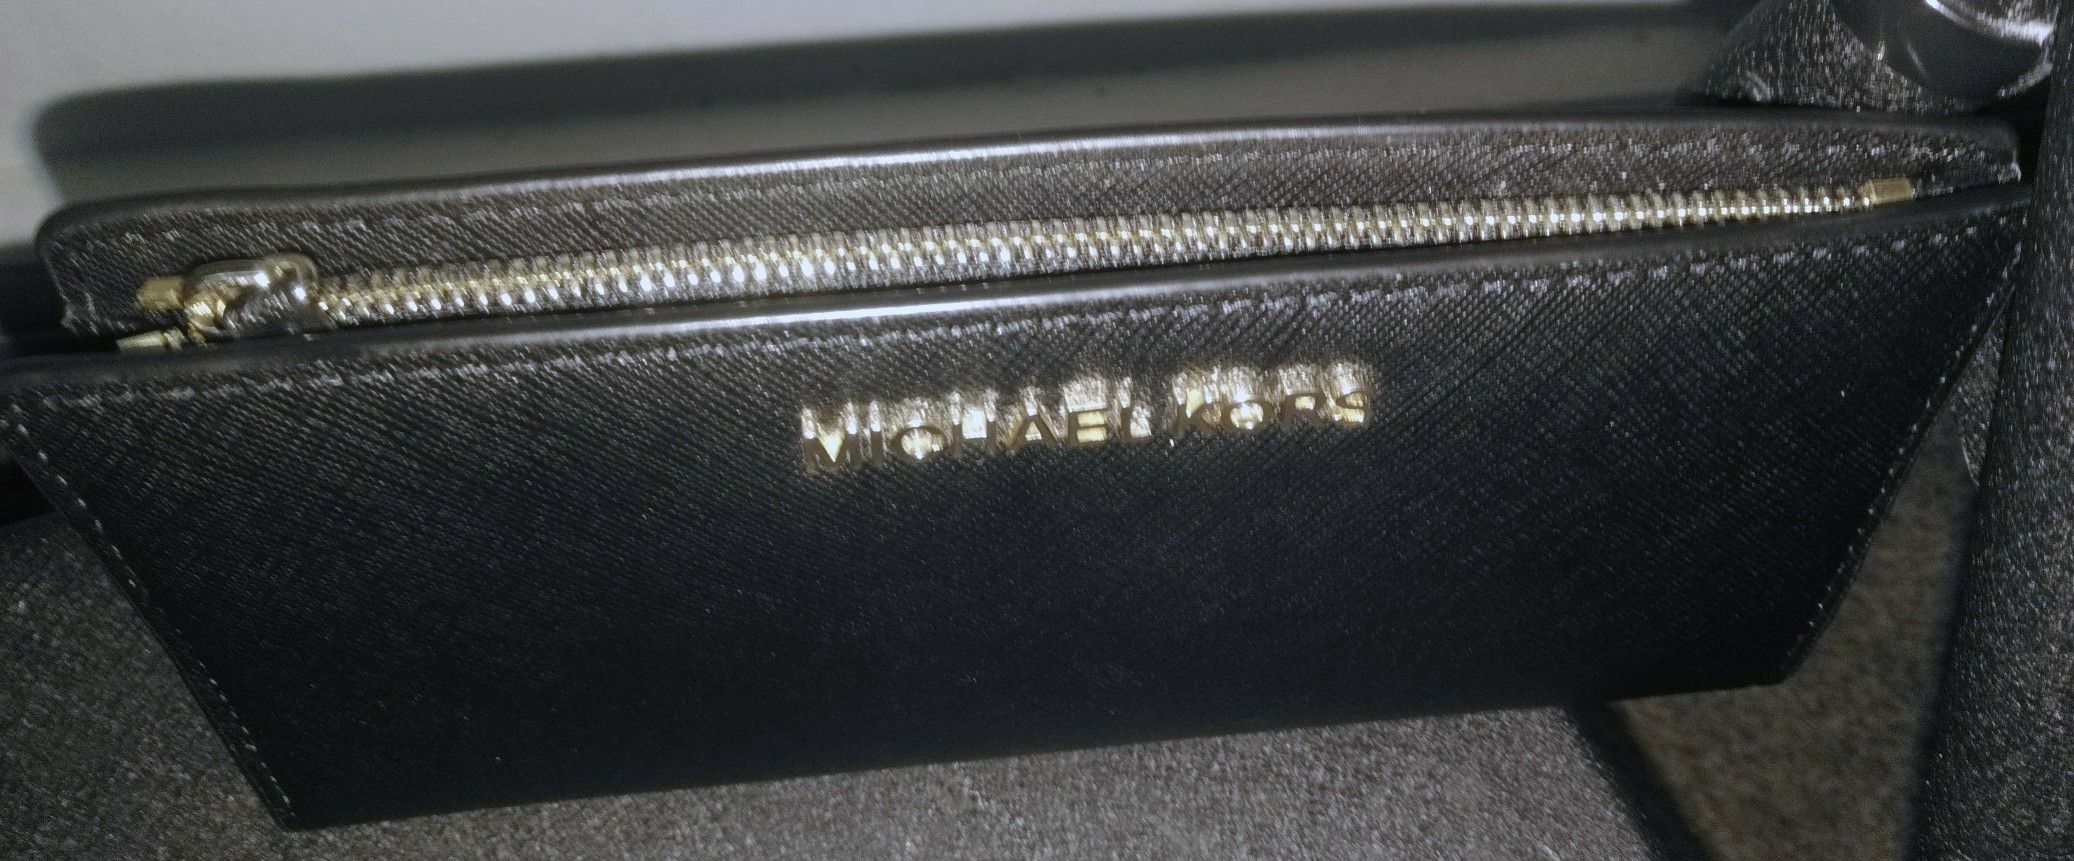 MK black and gold wallet.